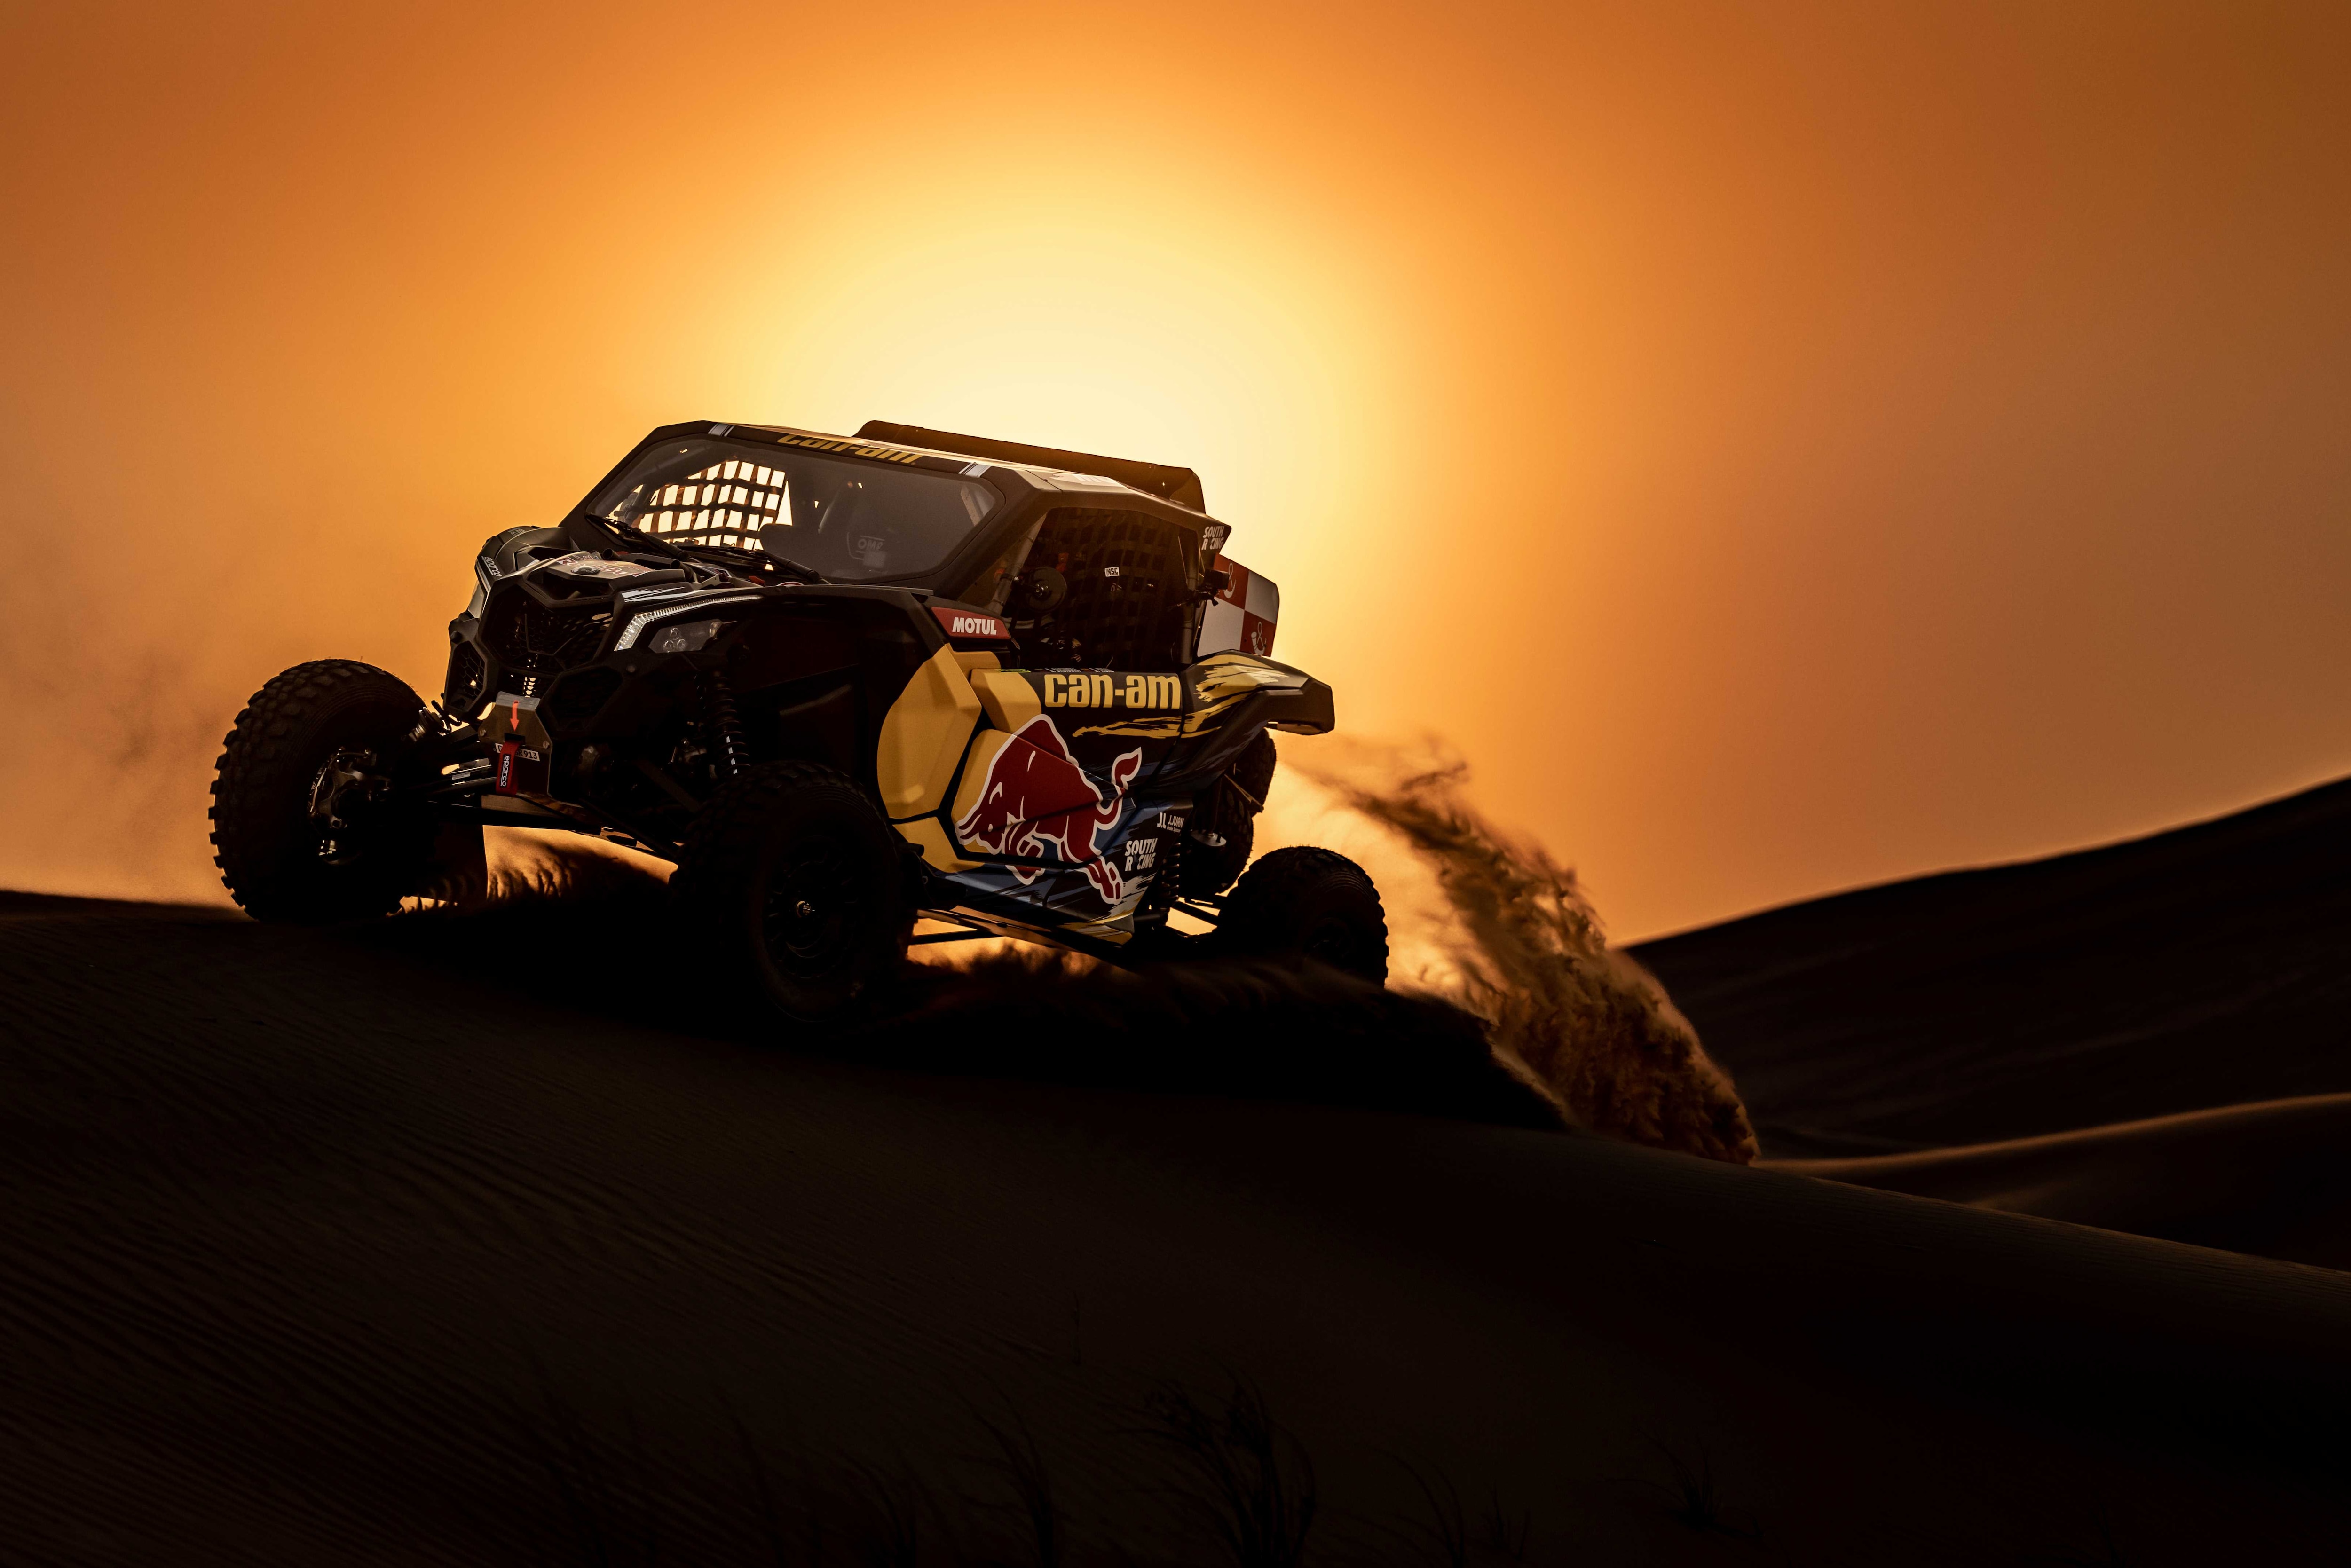 Impressive image of the maverick X3 in the desert at dusk